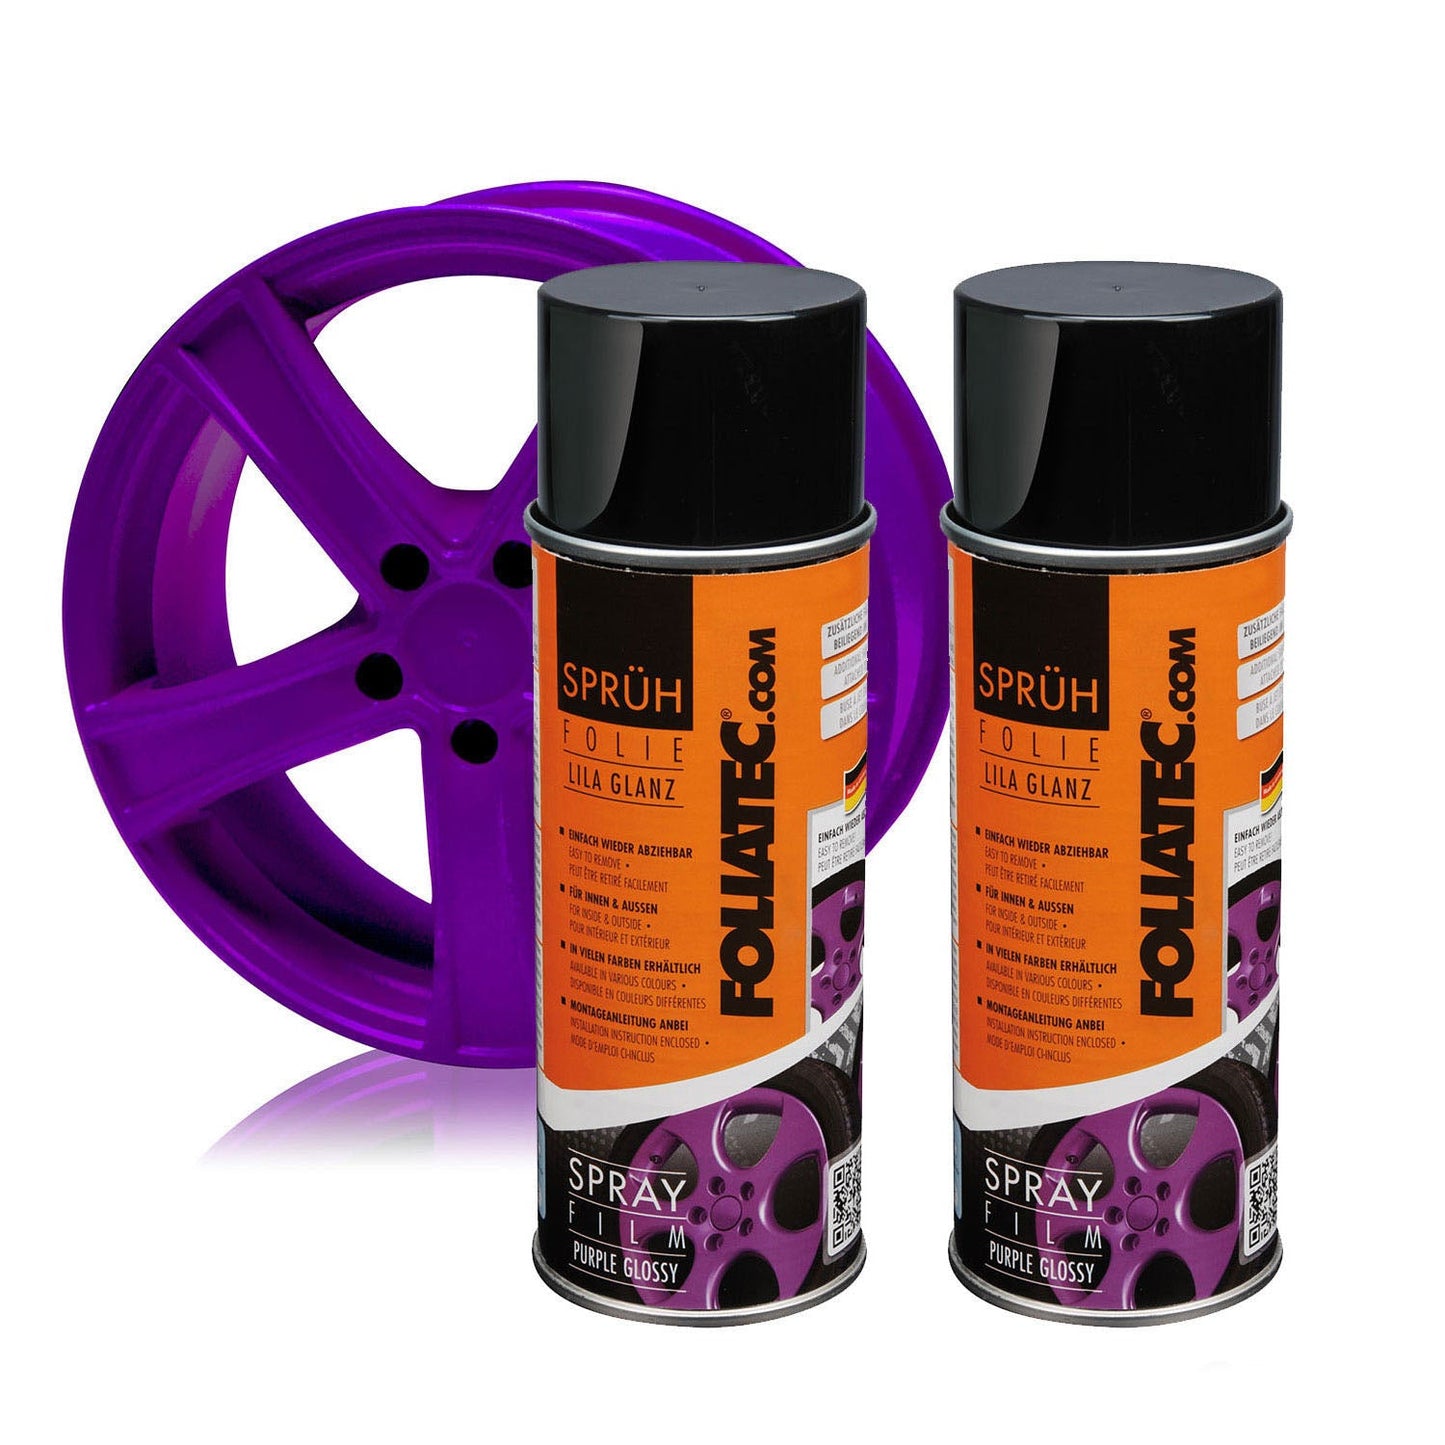 OMAC 2x Foliatec Wheel Rim Hubcaps Spray Paint Purple Glossy 13.5 Oz 96FT2091